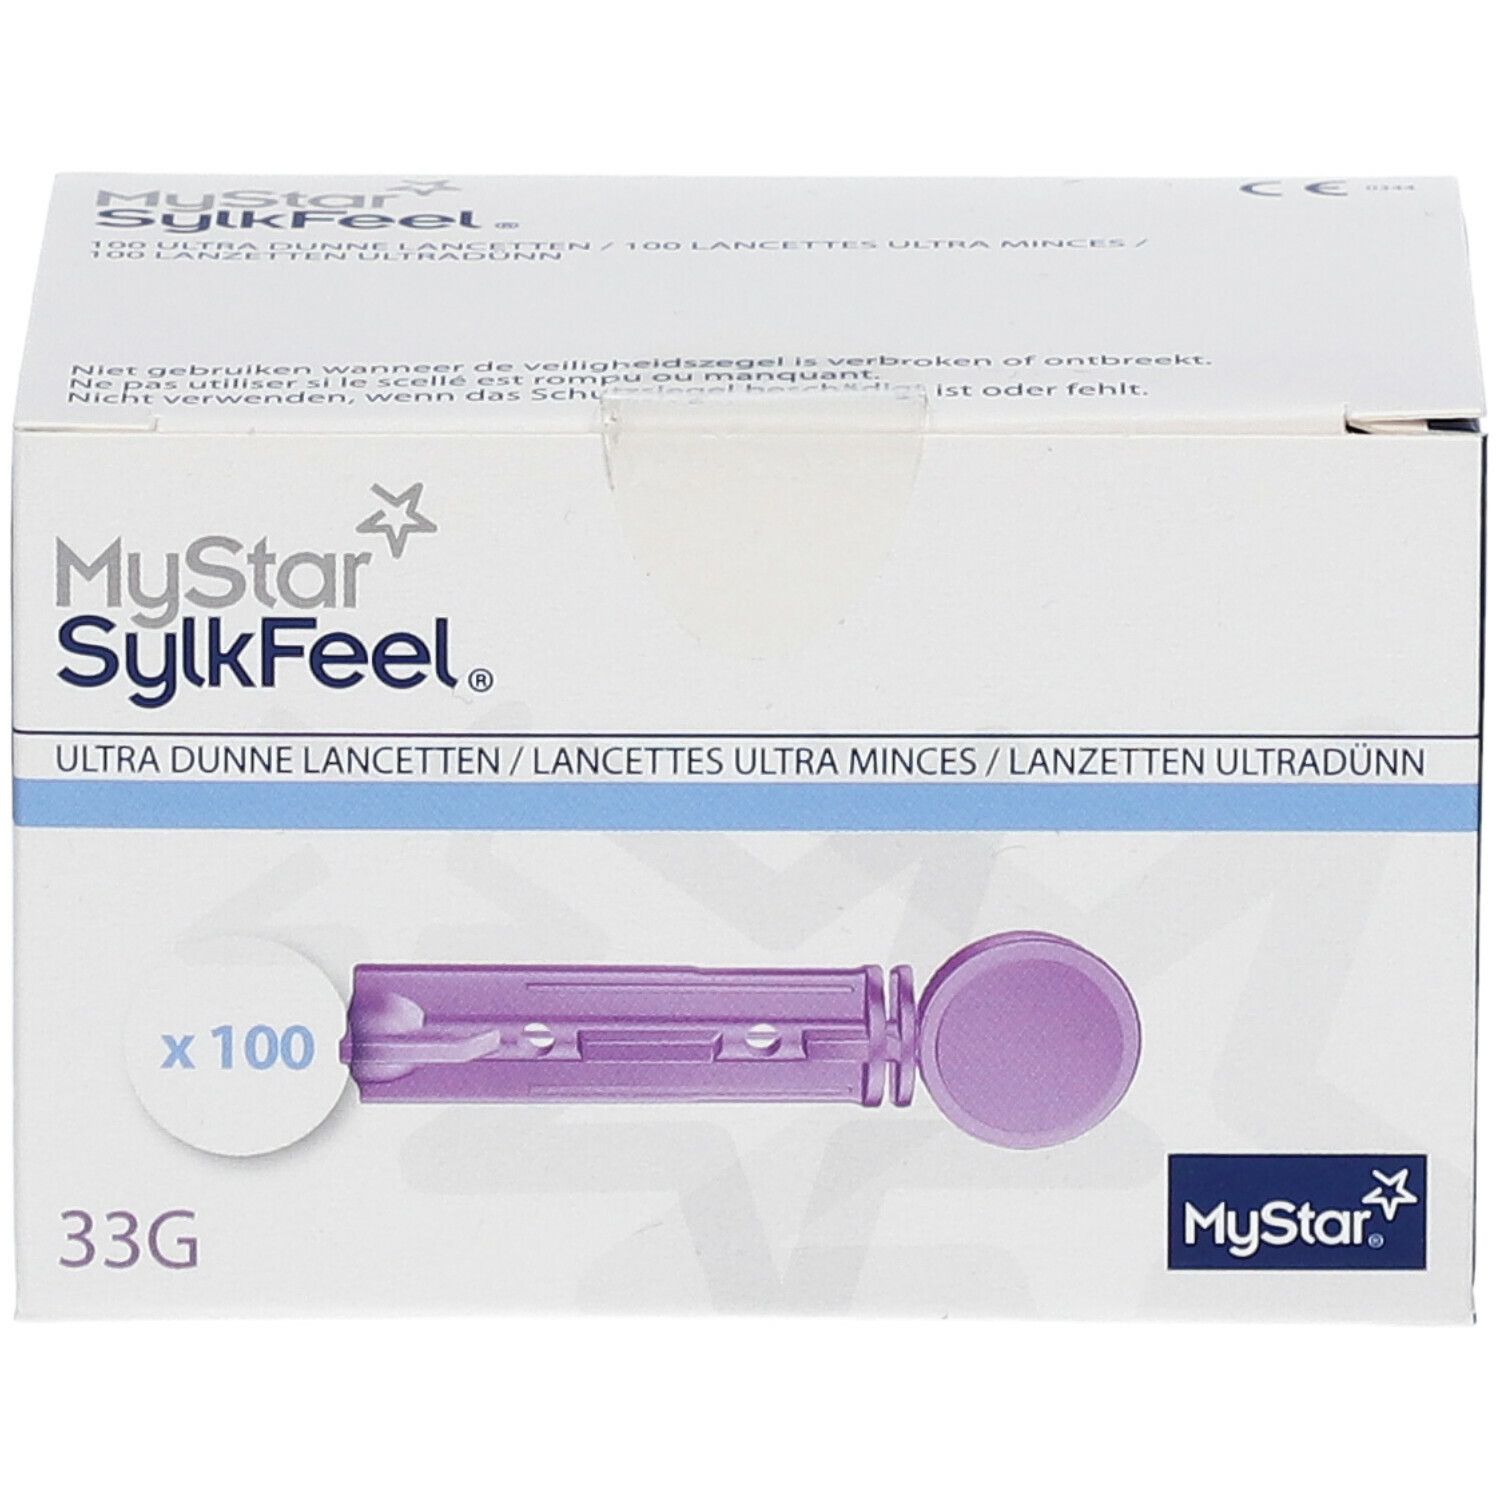 Mystar Sylkfeel 33g Lancet